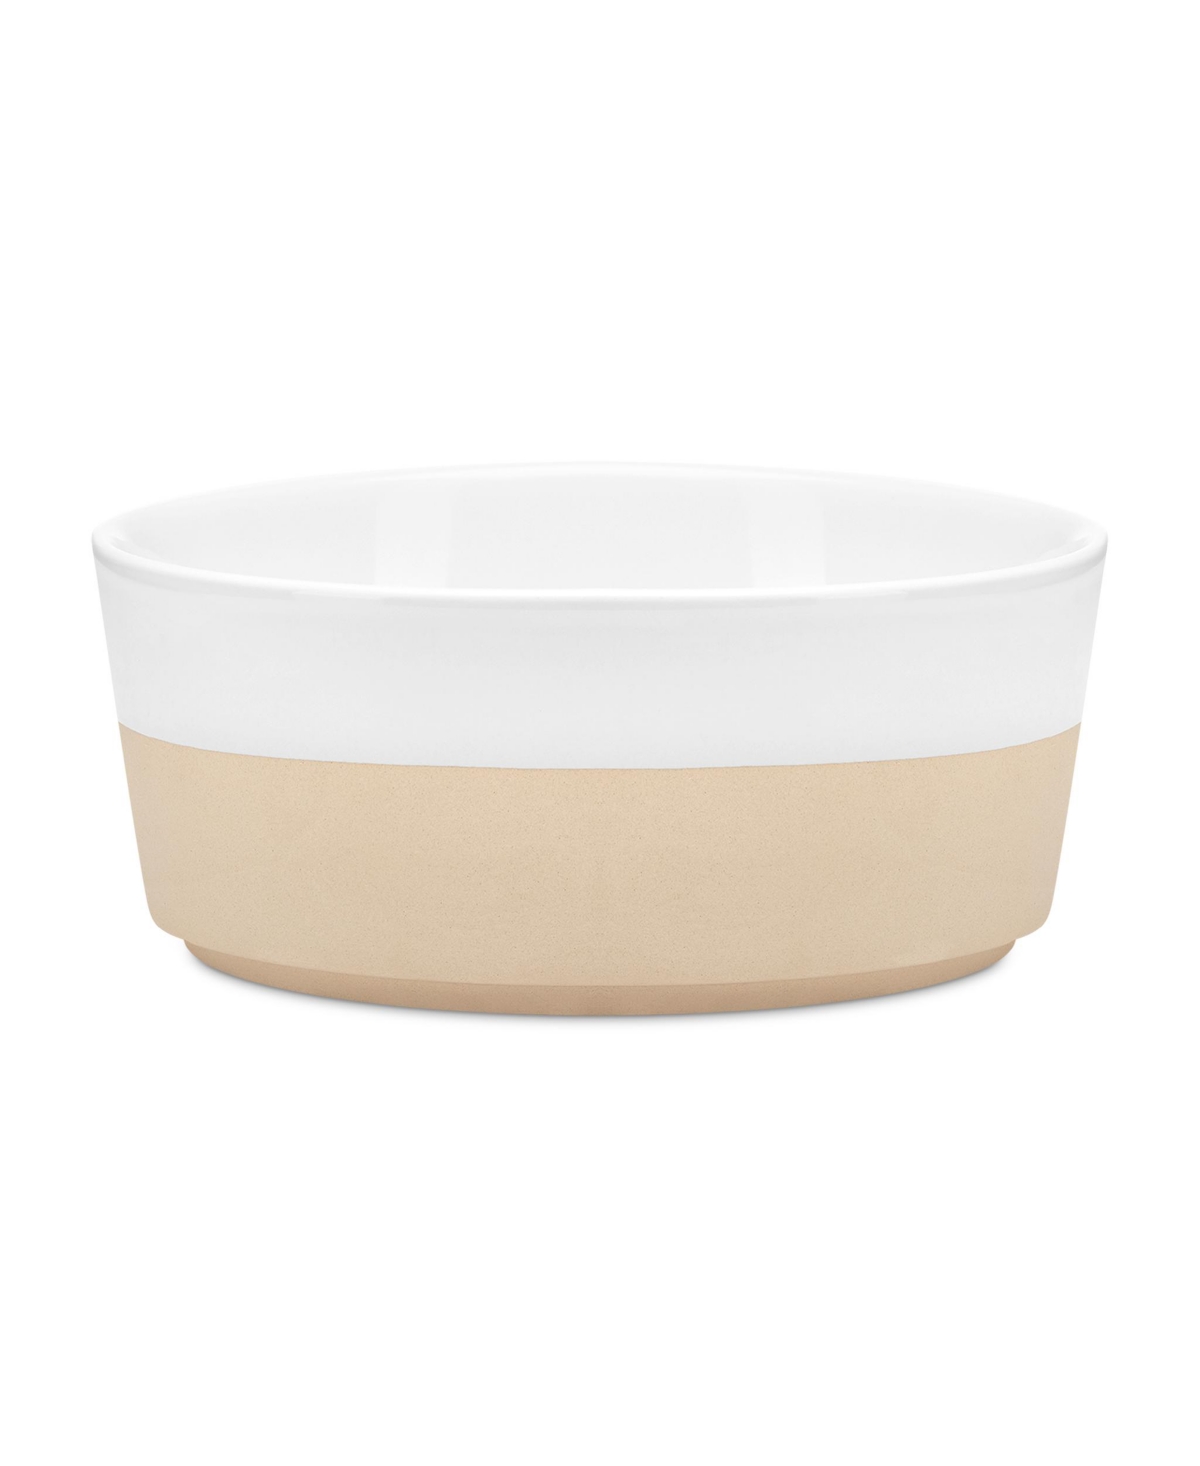 Textured Dipper Ceramic Dog Bowl - White - Small - White